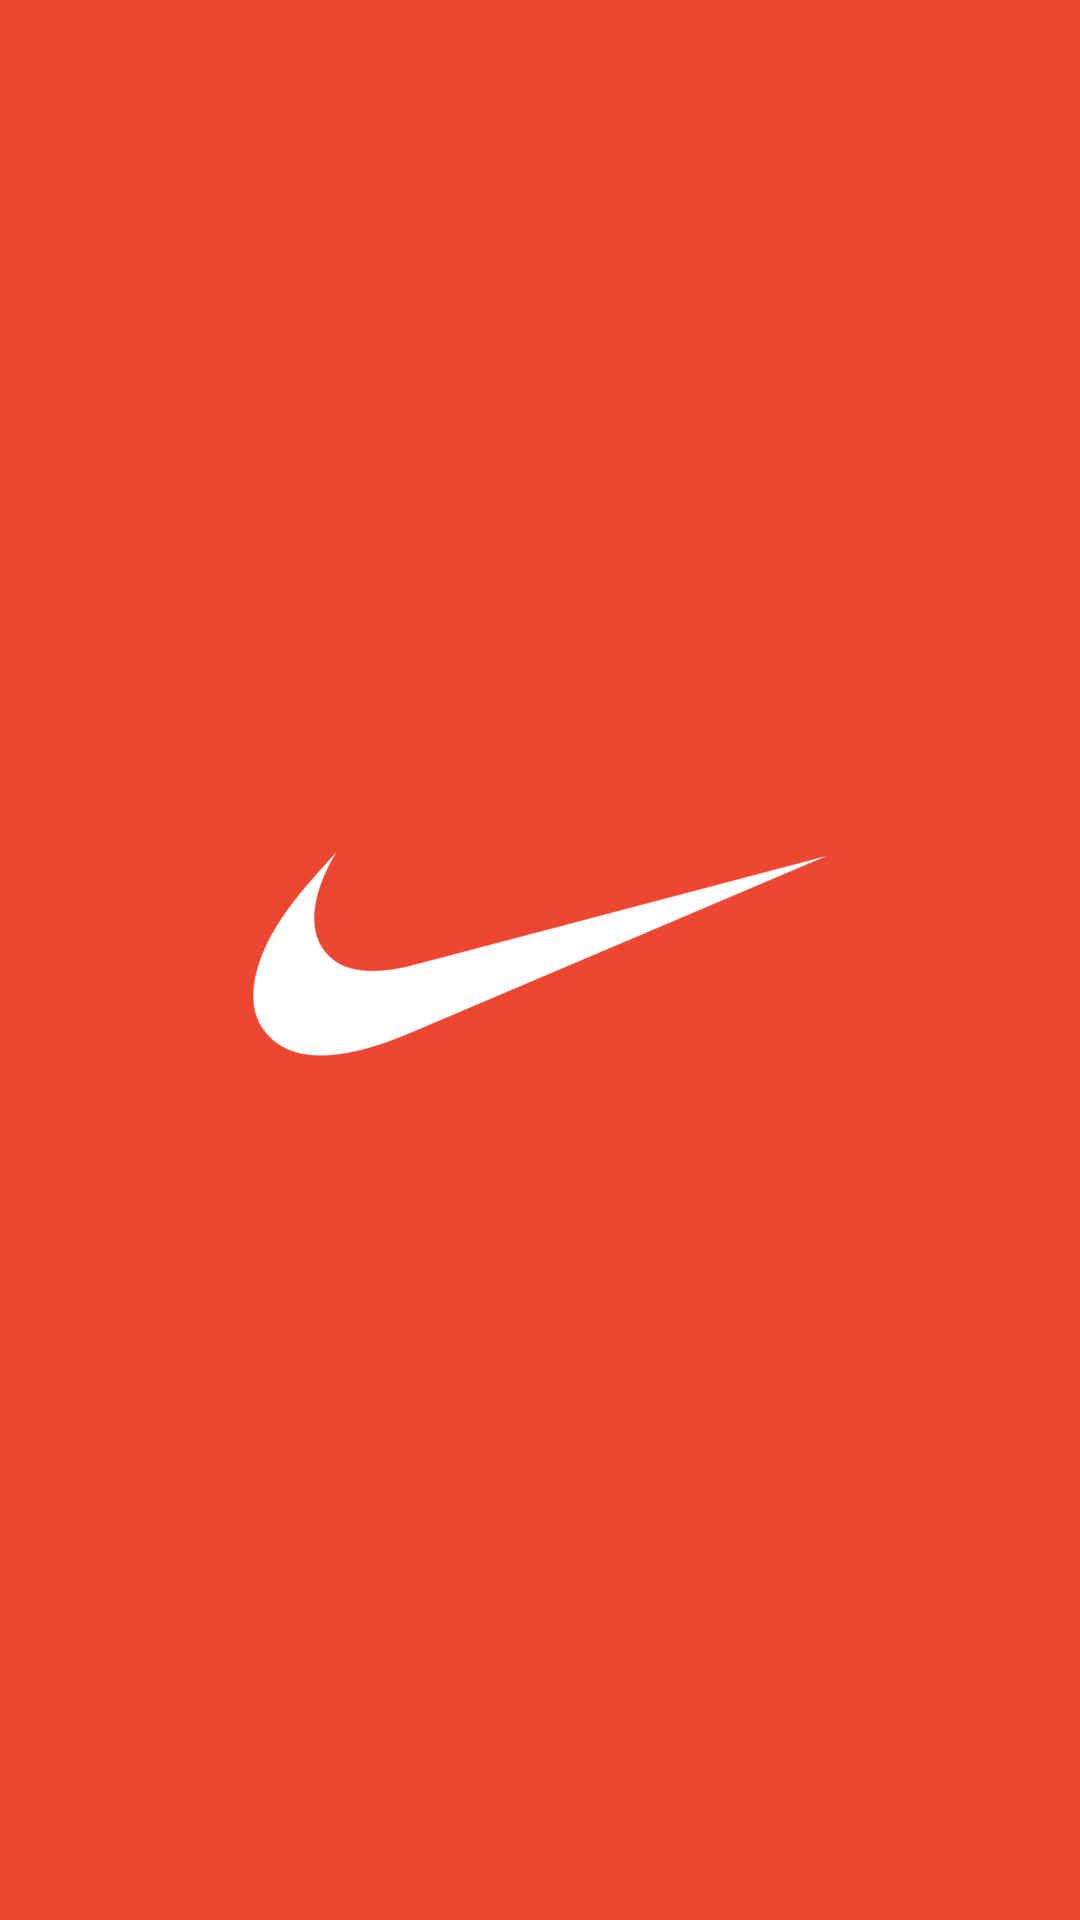 Cool Red Nike Logo - NIKE RED iPhone Wallpaper | iPhone | Iphone wallpaper, Nike ...